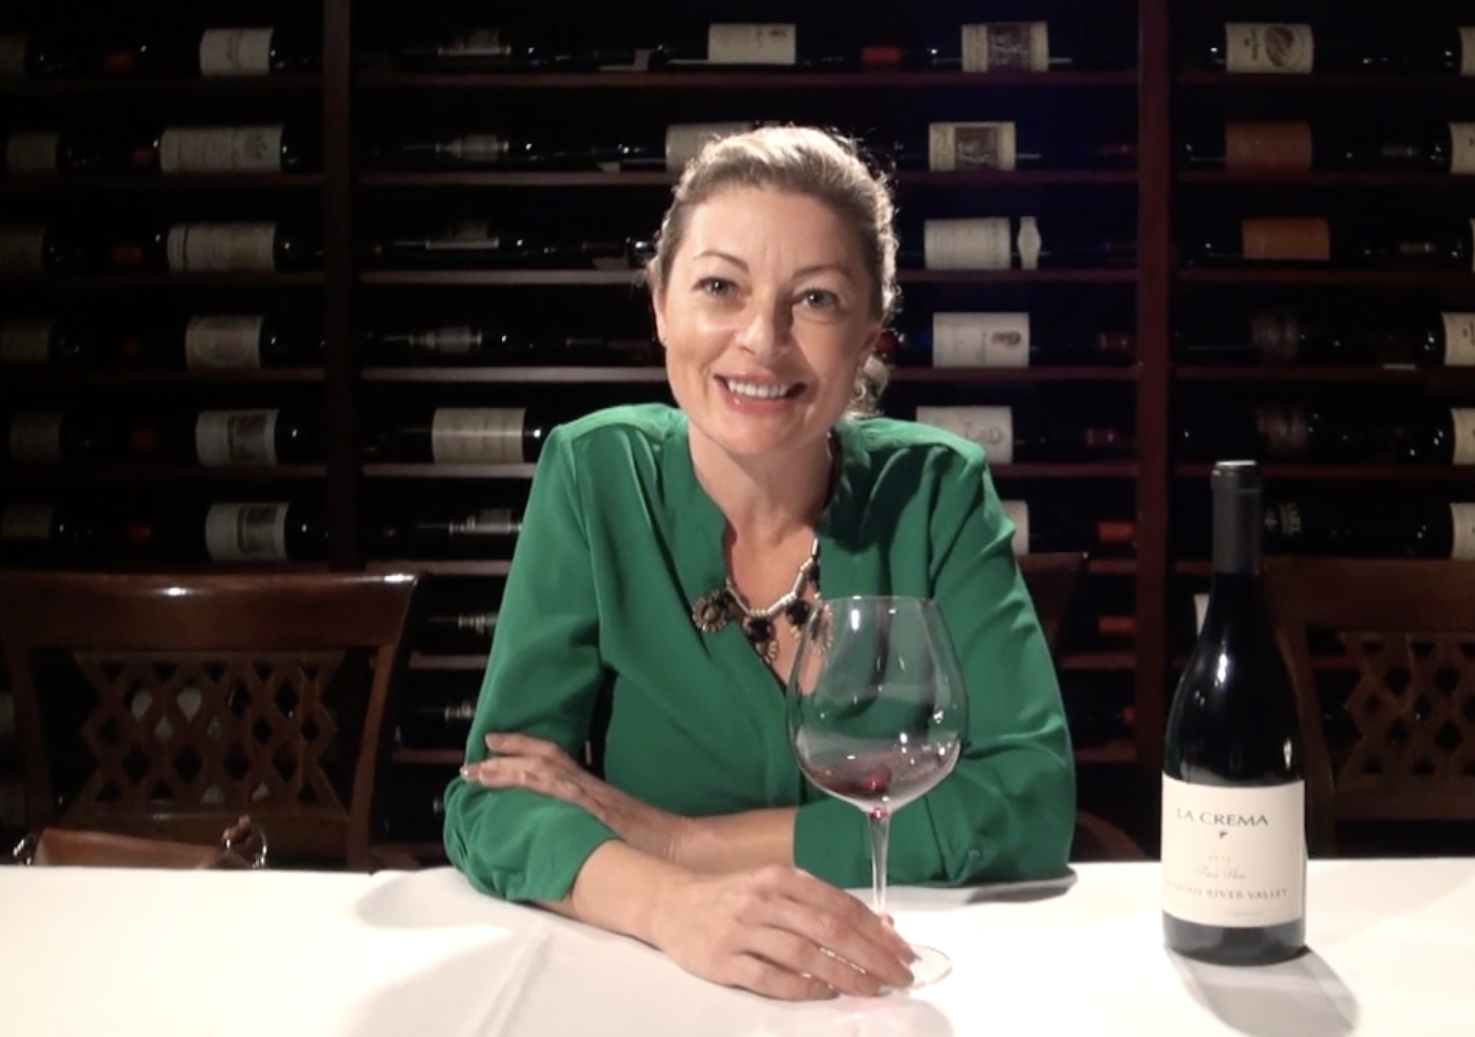 Jennifer Huether MS enjoying a glass of La Crema Pinot Noir in Barberian's cellar.